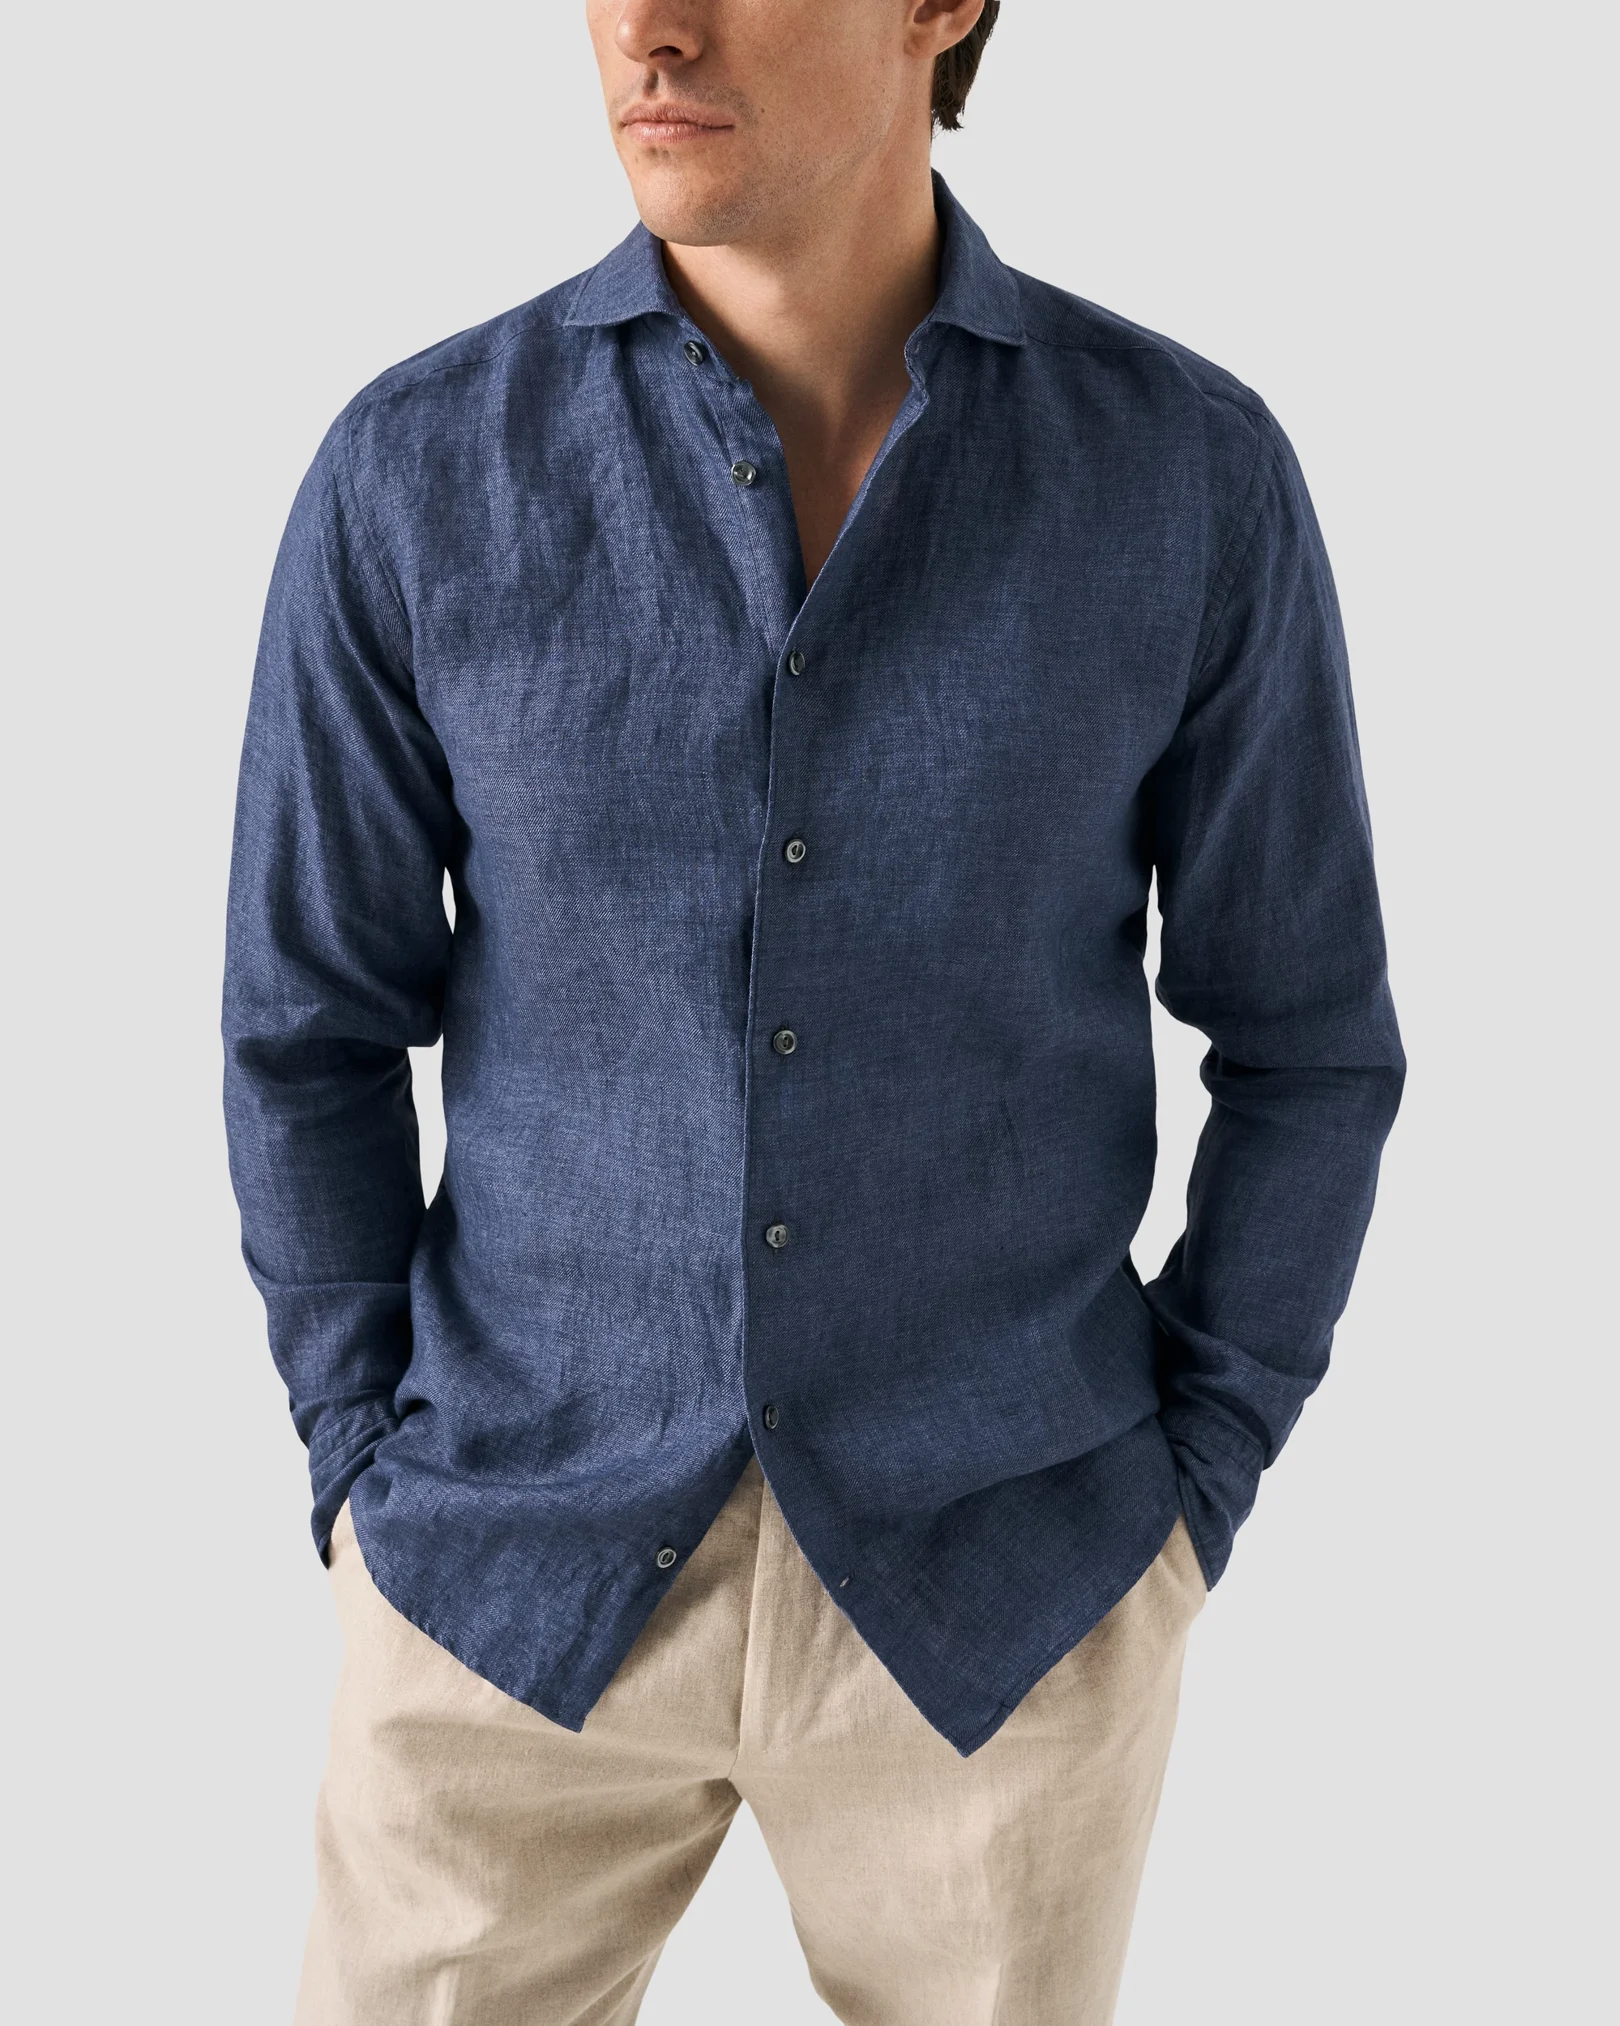 Eton - solid navy linen shirt wide spread